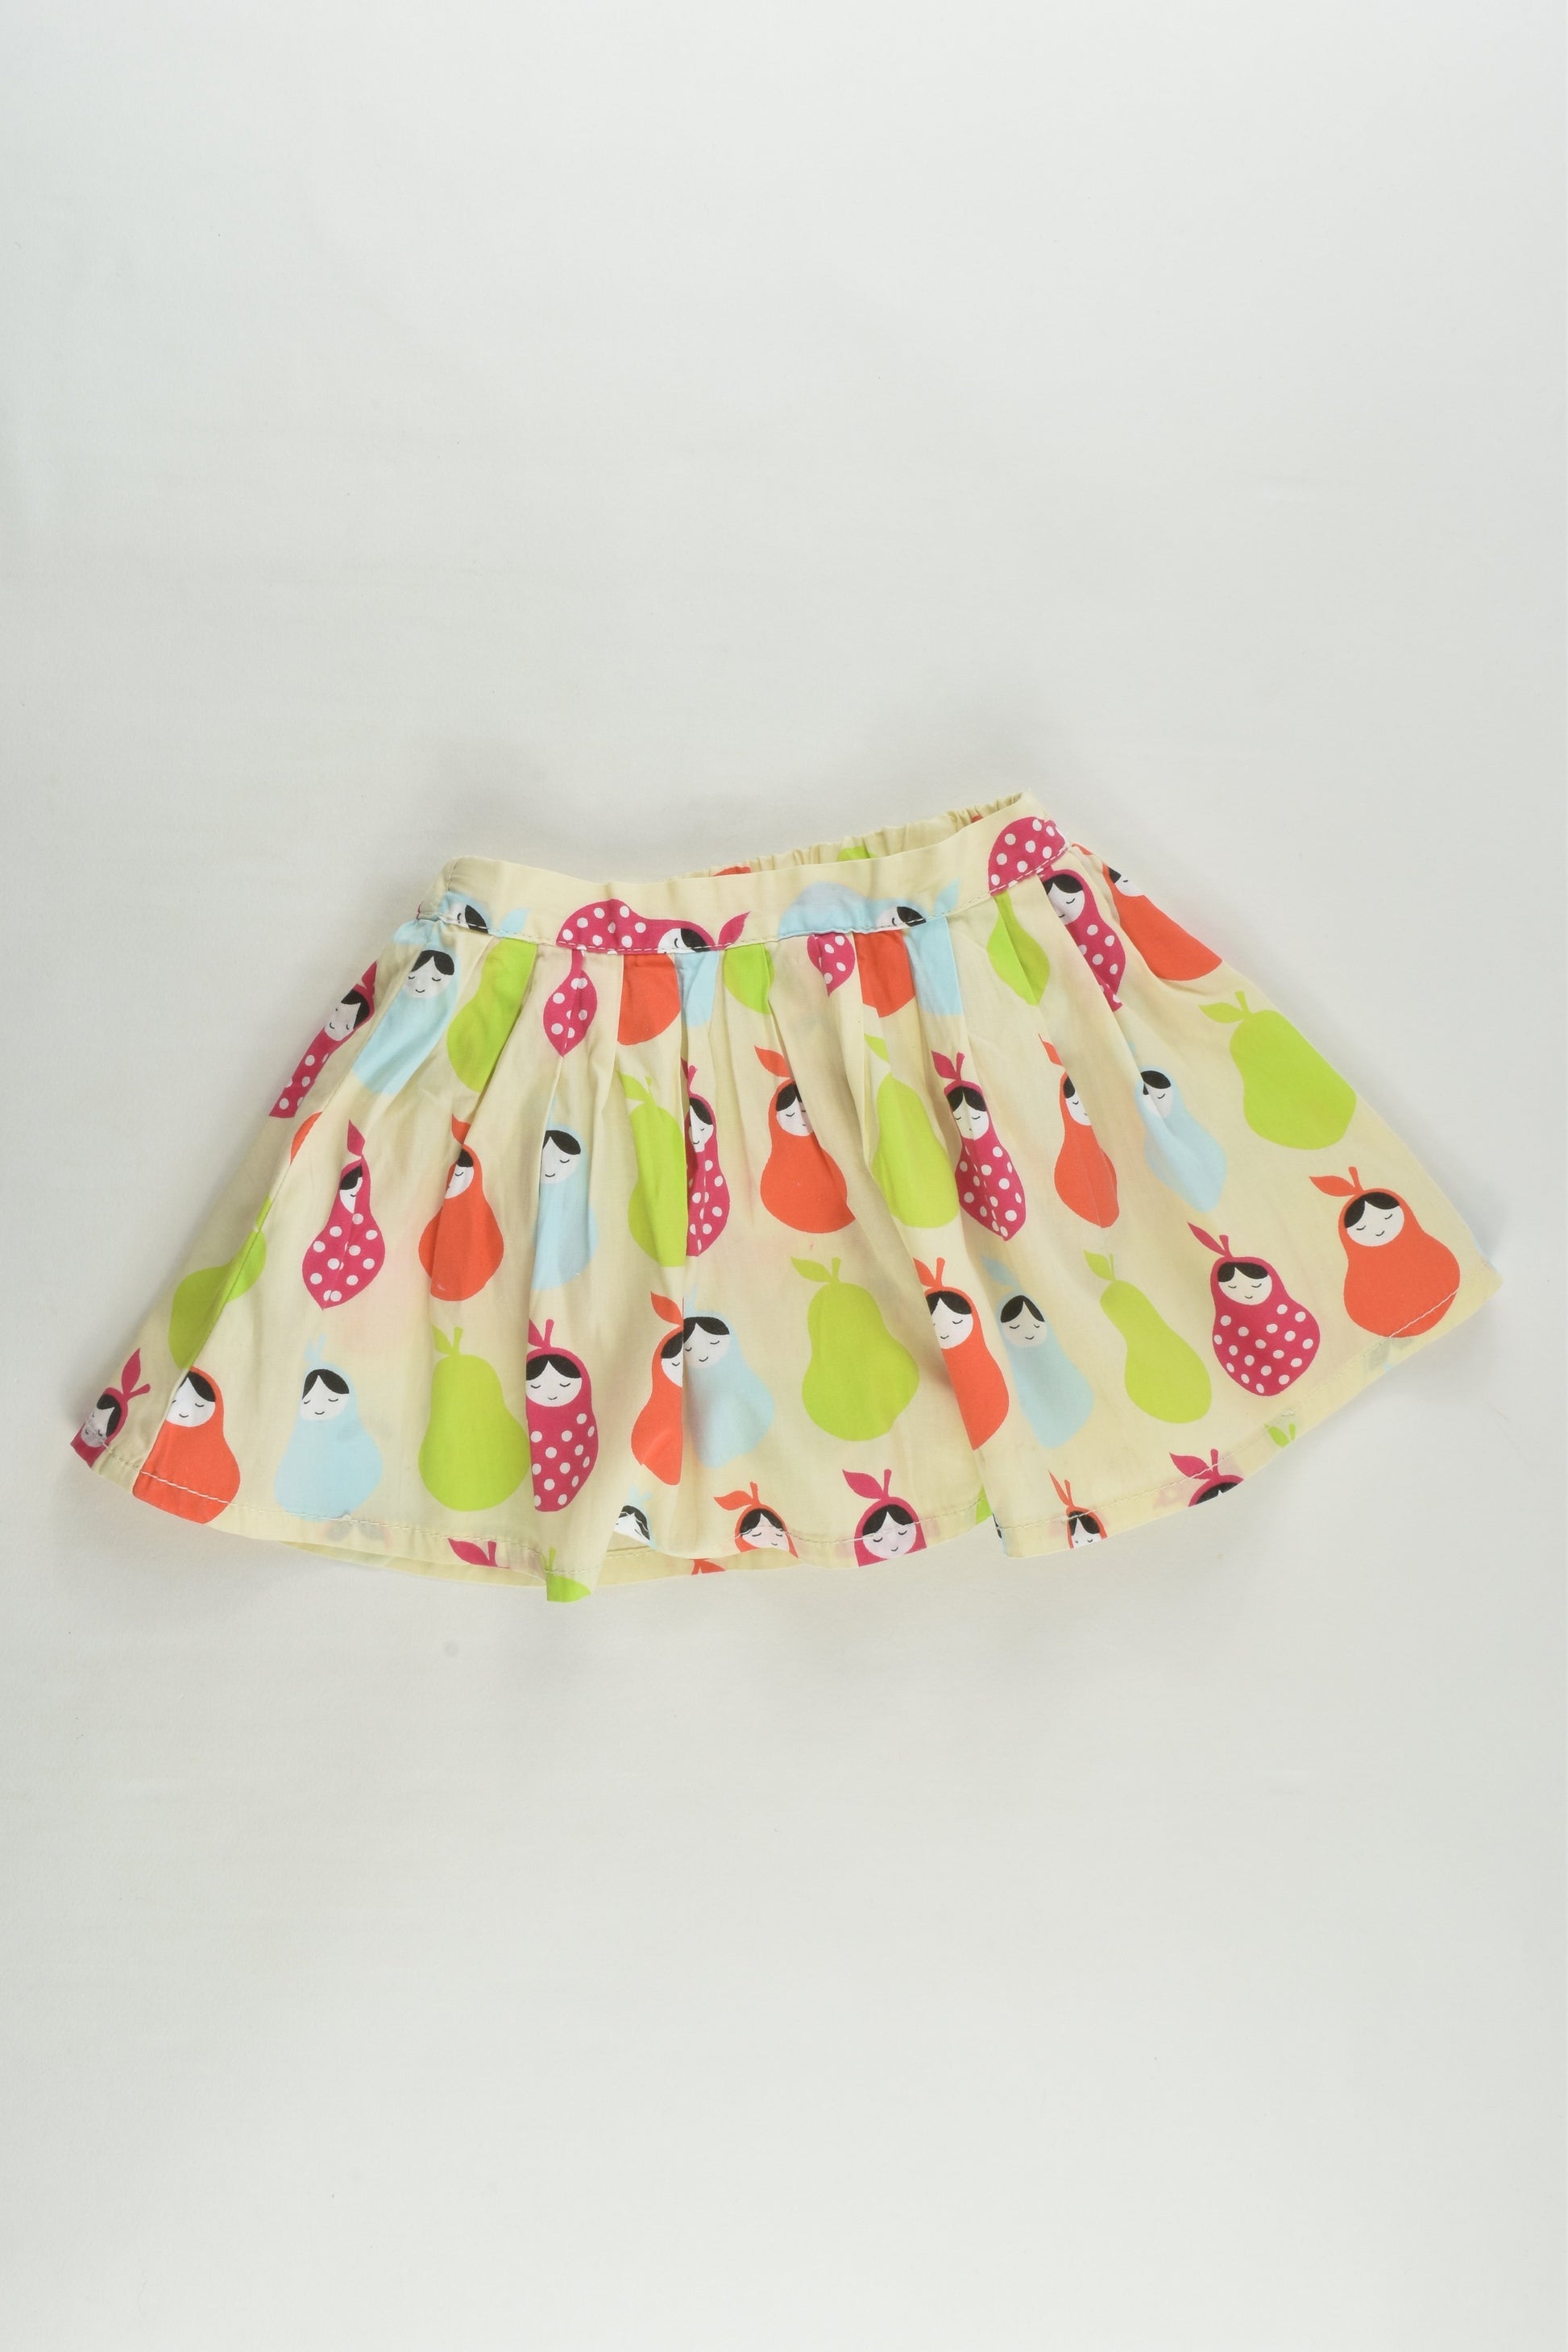 Sosooki Size 0 Matryoshka Skirt with Bloomers Underneath